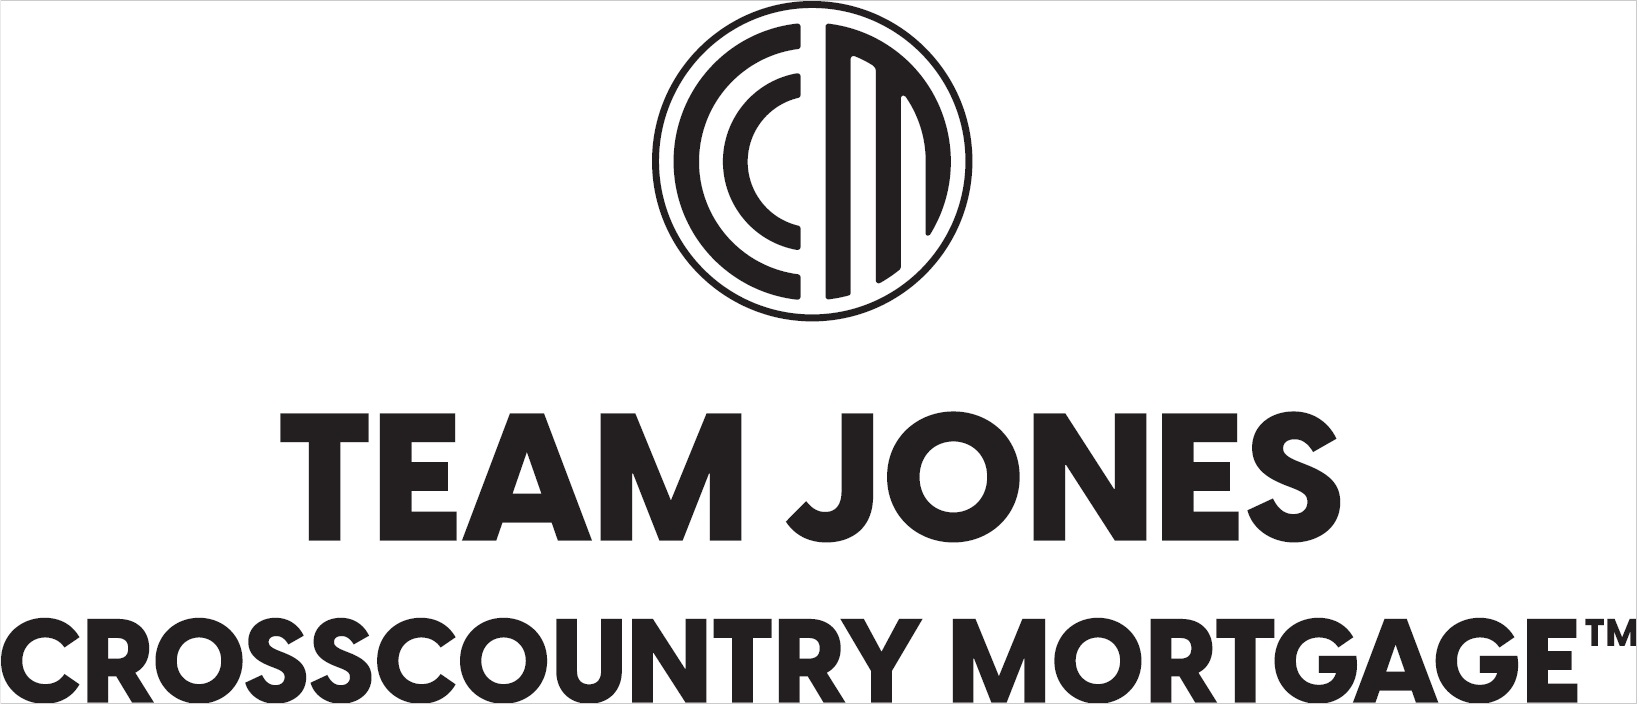 Team Jones Cross Country Mortgage